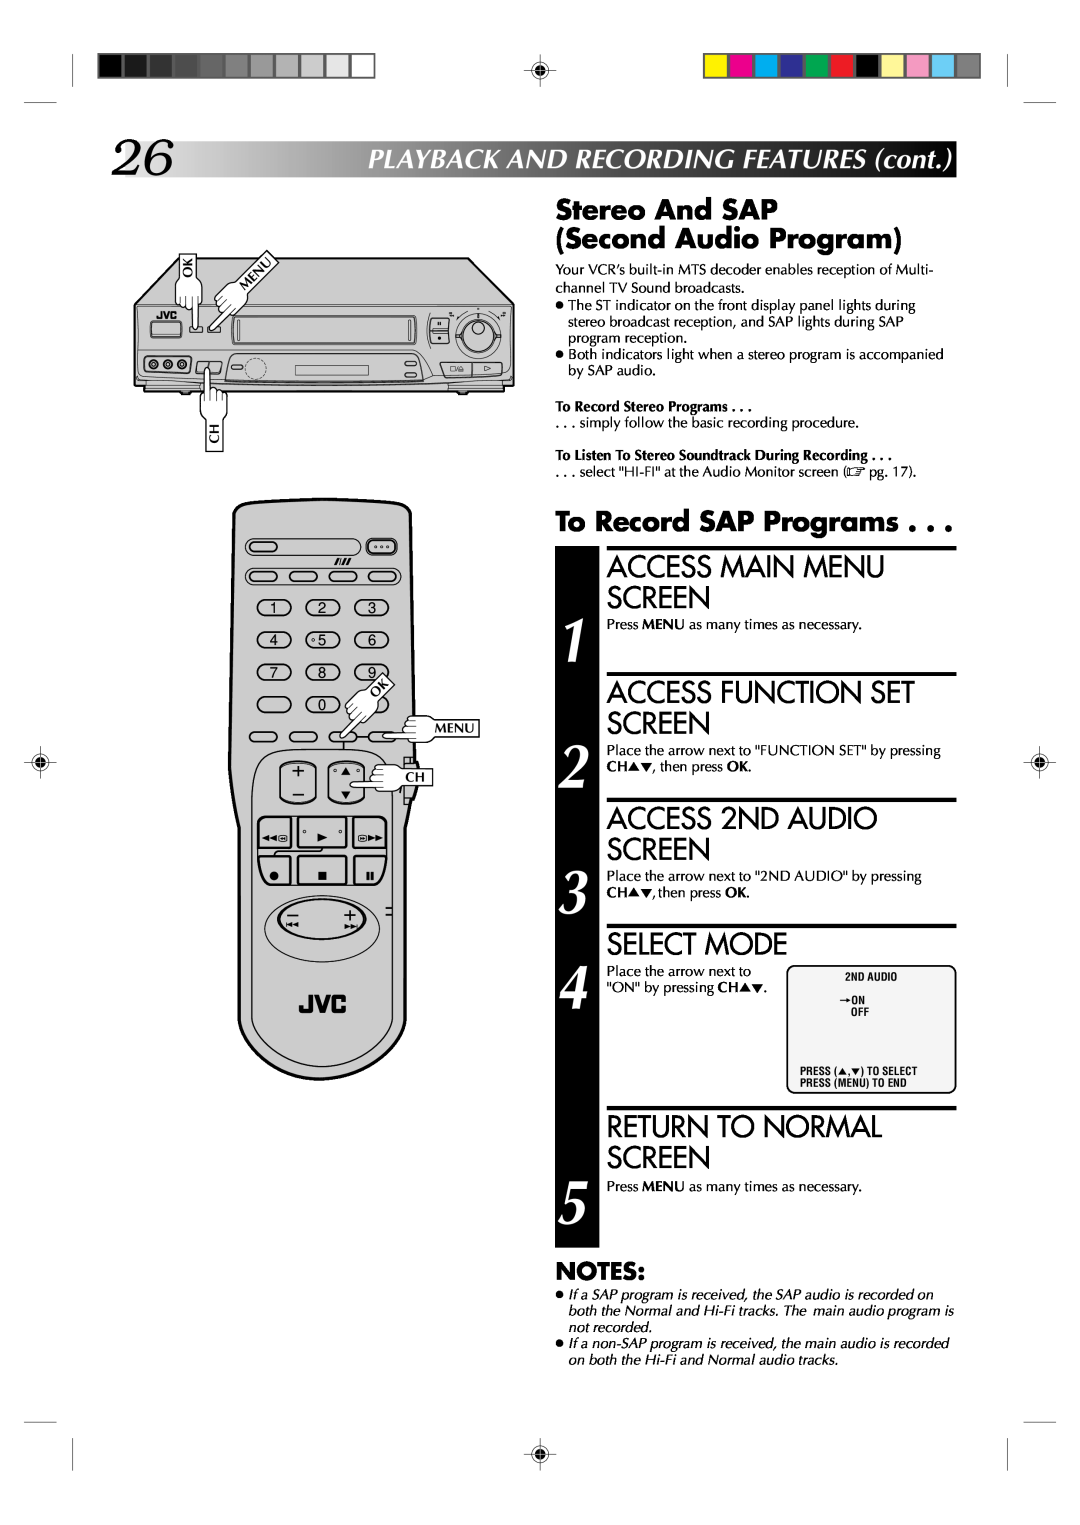 JVC HR-J631T manual ACCESS 2ND AUDIO, Stereo And SAP Second Audio Program, To Record SAP Programs, Access Main Menu, Screen 